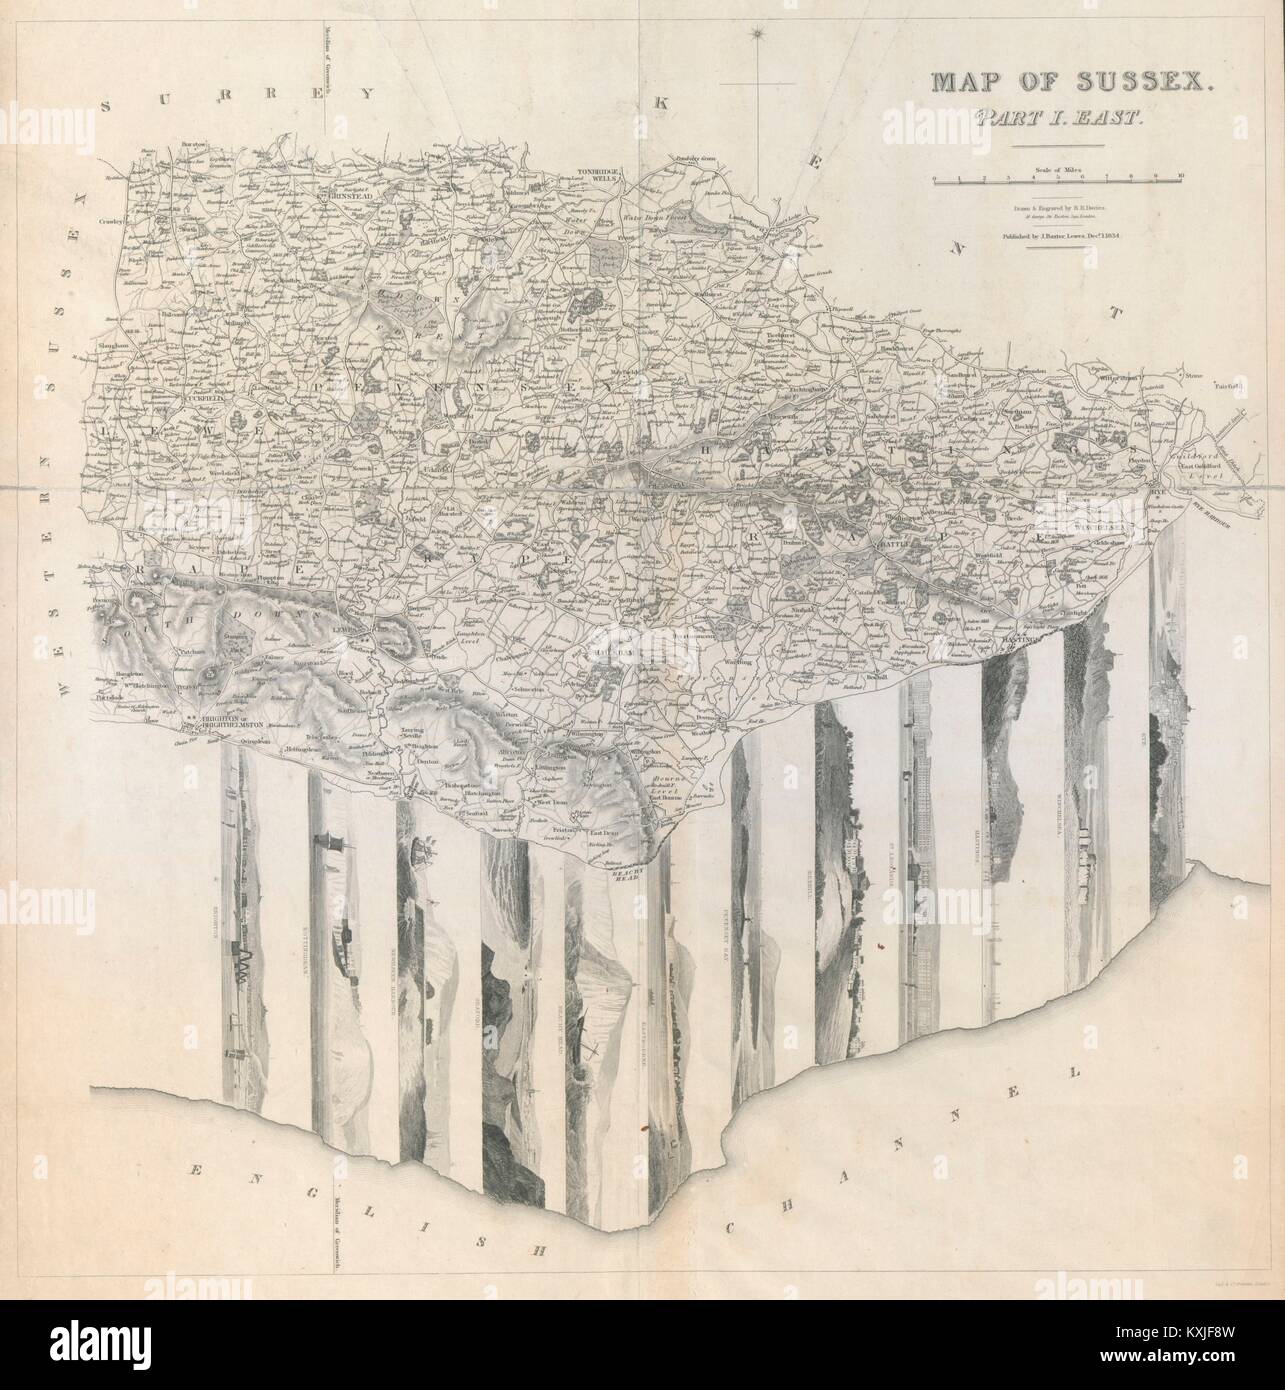 East Sussex antique county map w/ costiero/città panorama vignette BR DAVIES 1834 Foto Stock